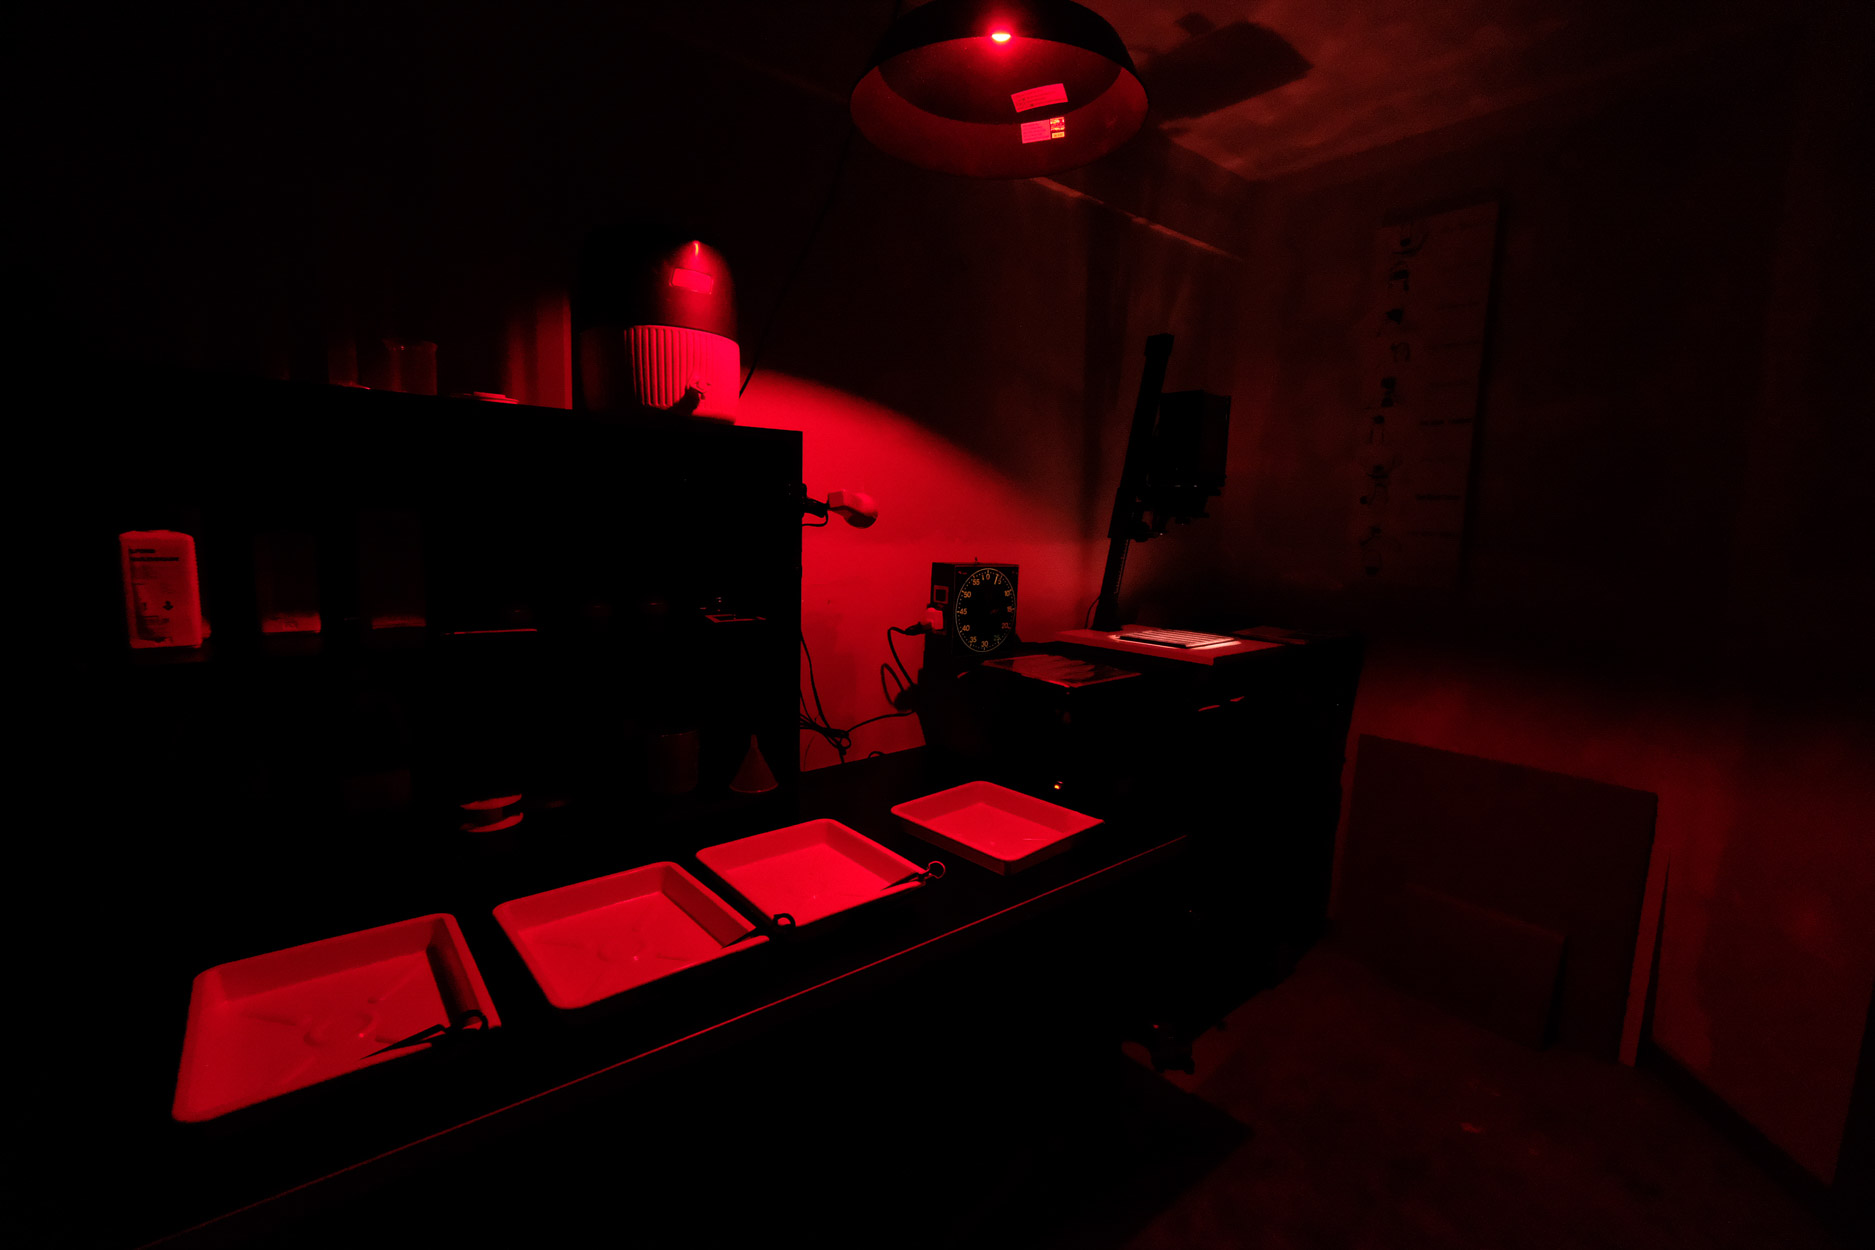 Budget darkroom - Darkroom safelight